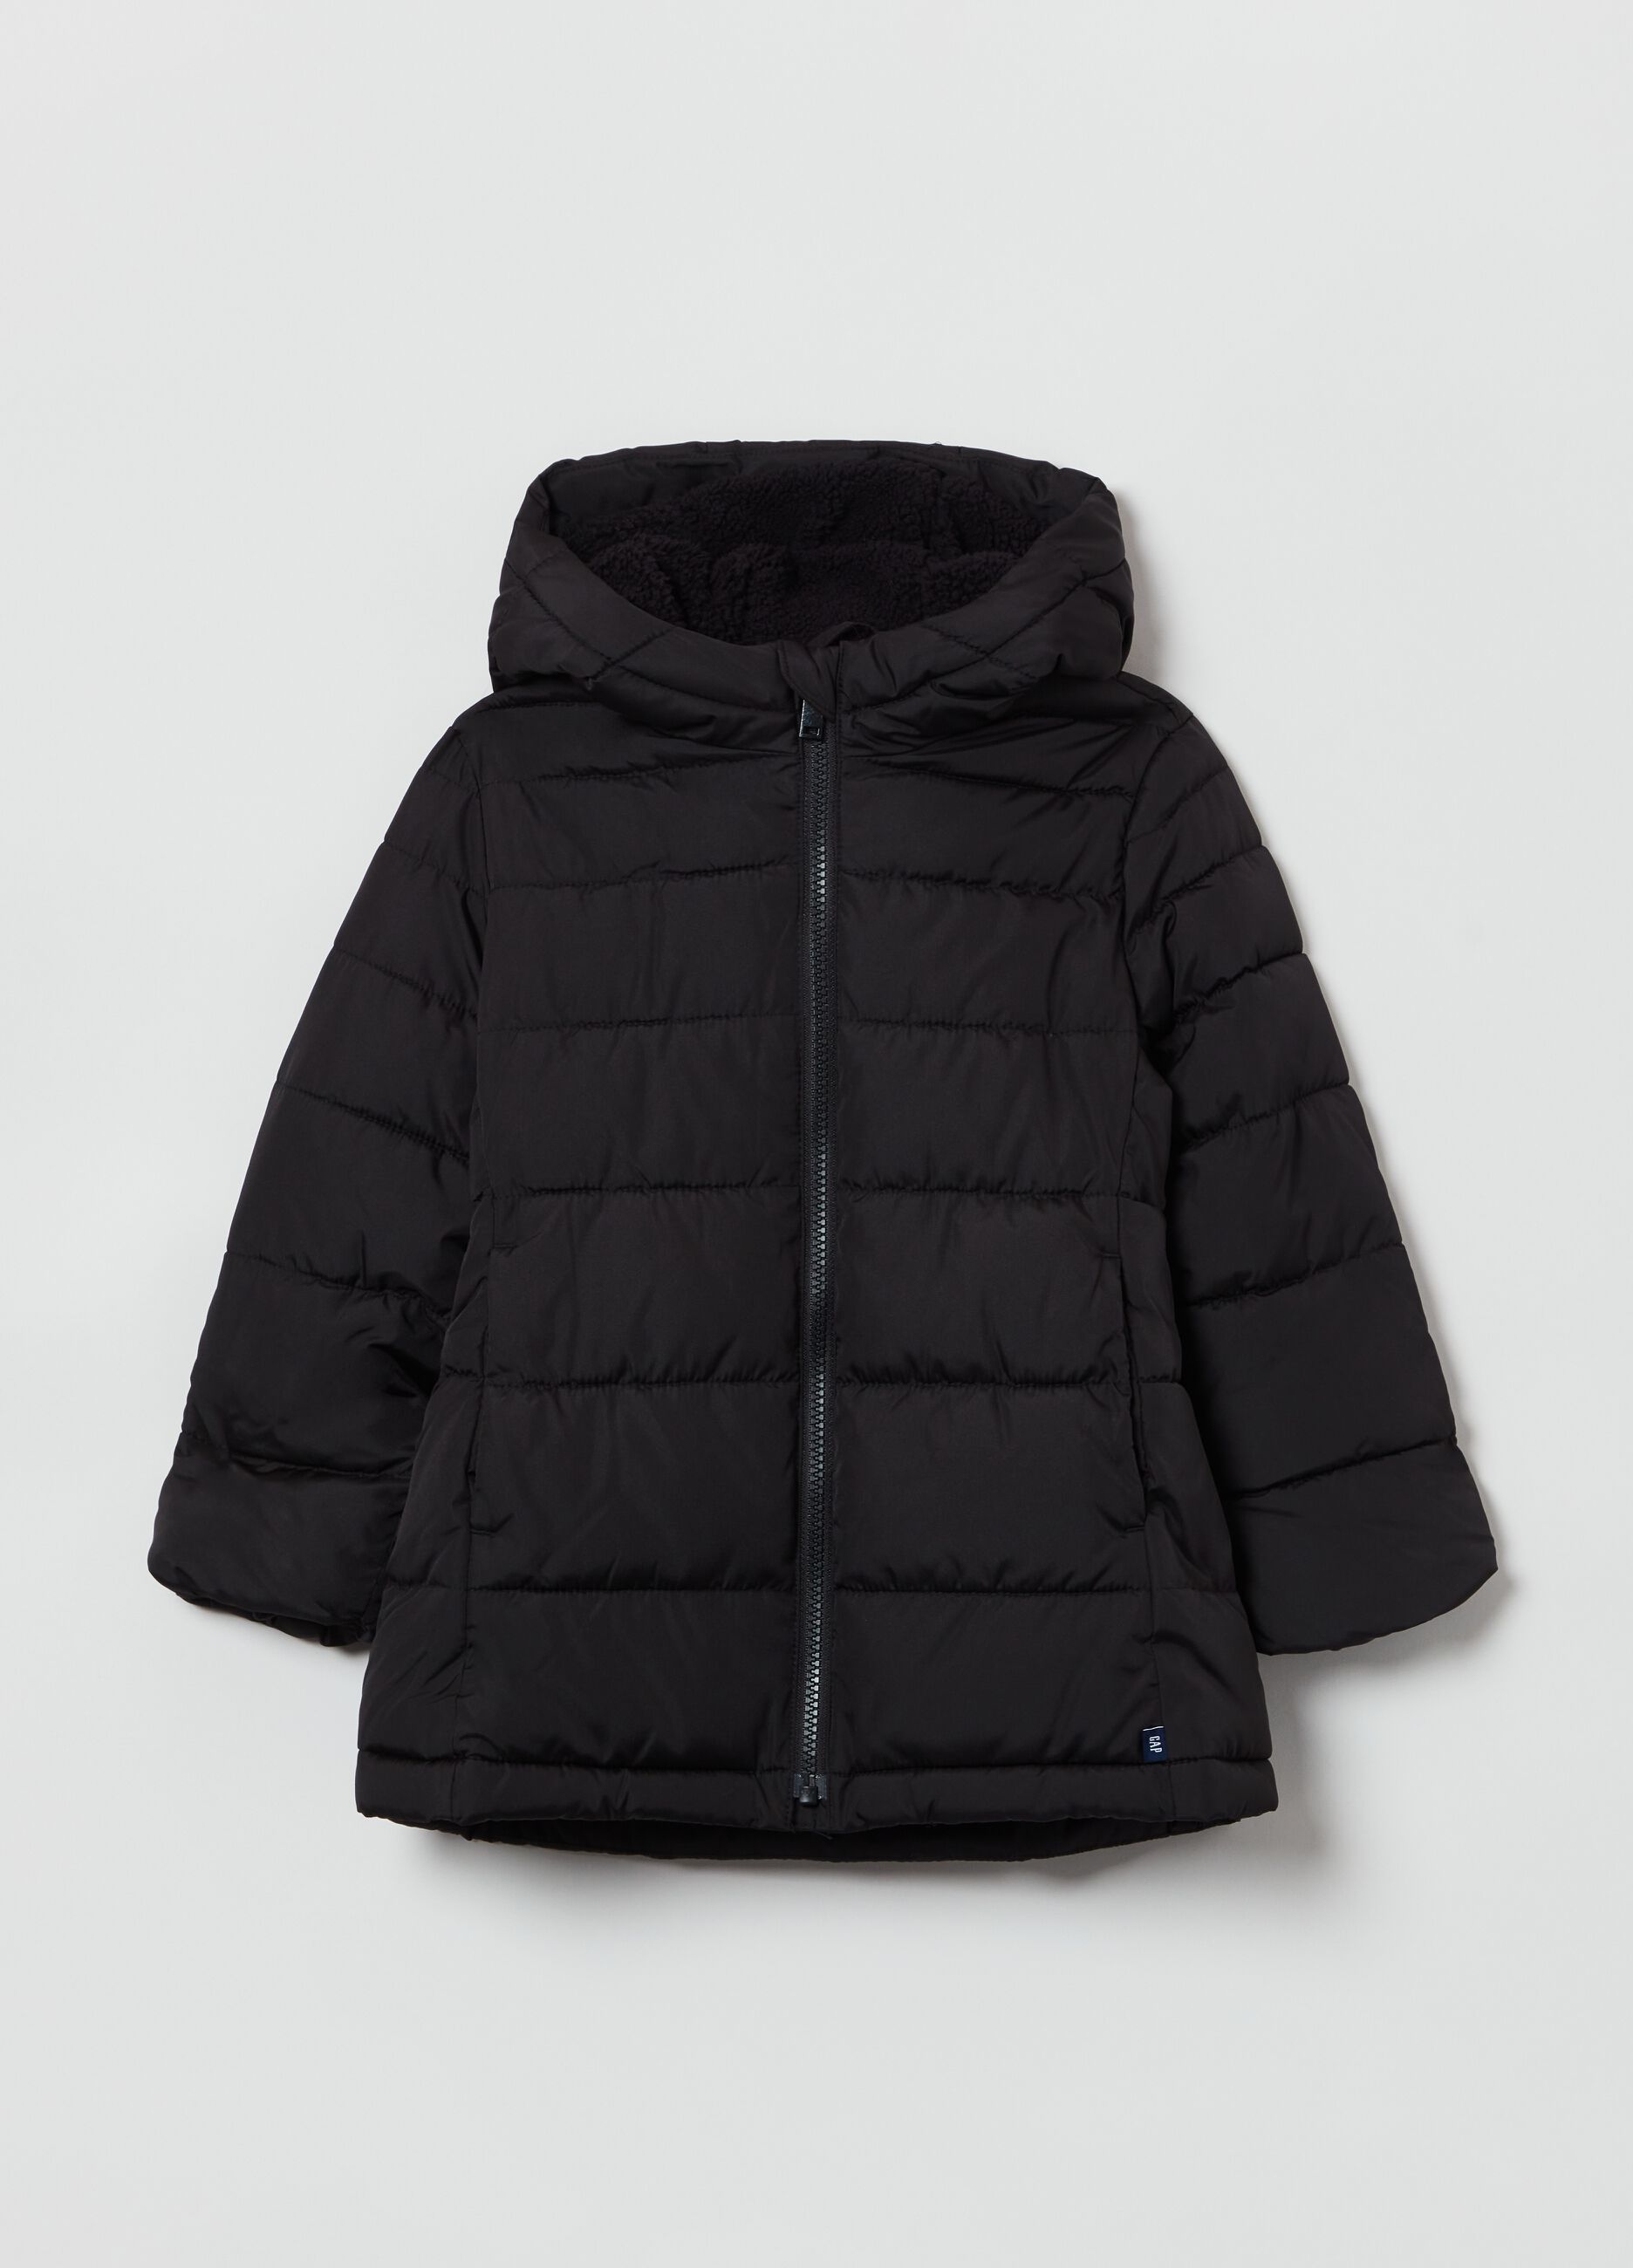 Full-zip long puffer jacket with hood